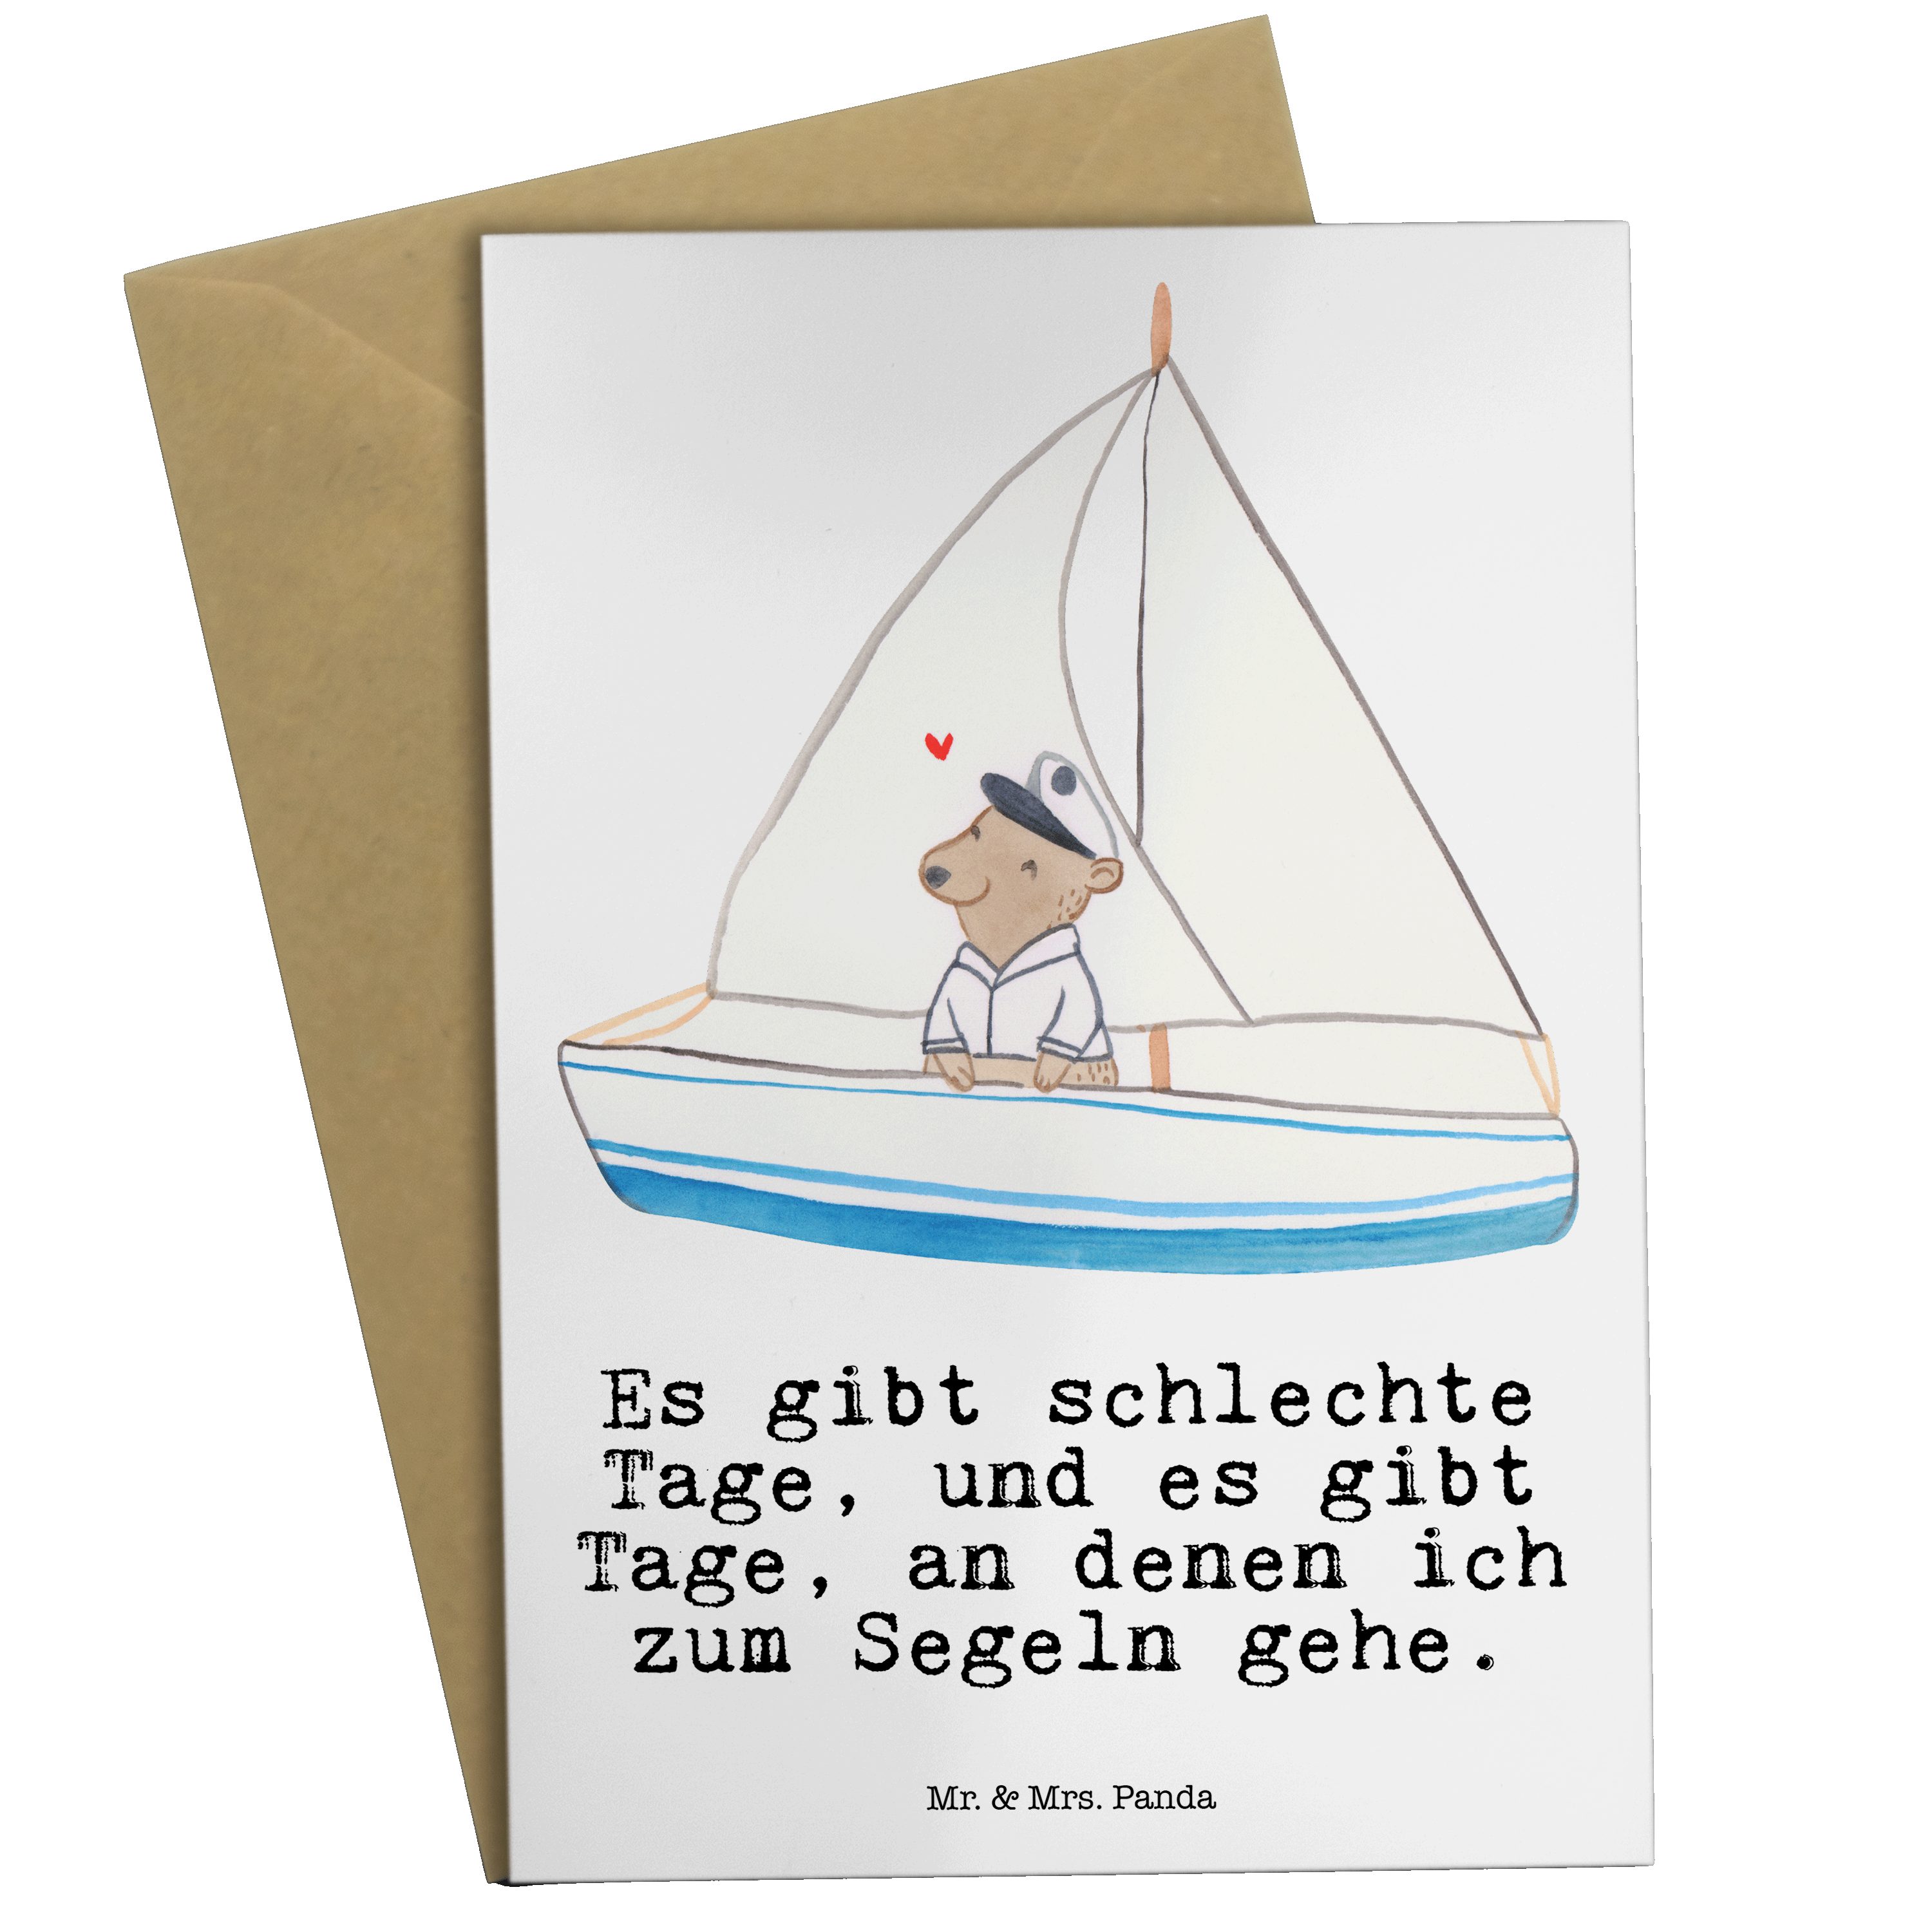 Mr. & Mrs. Panda Grußkarte Bär Segeln Tage - Weiß - Geschenk, Segelschule, Klappkarte, Yachtclub